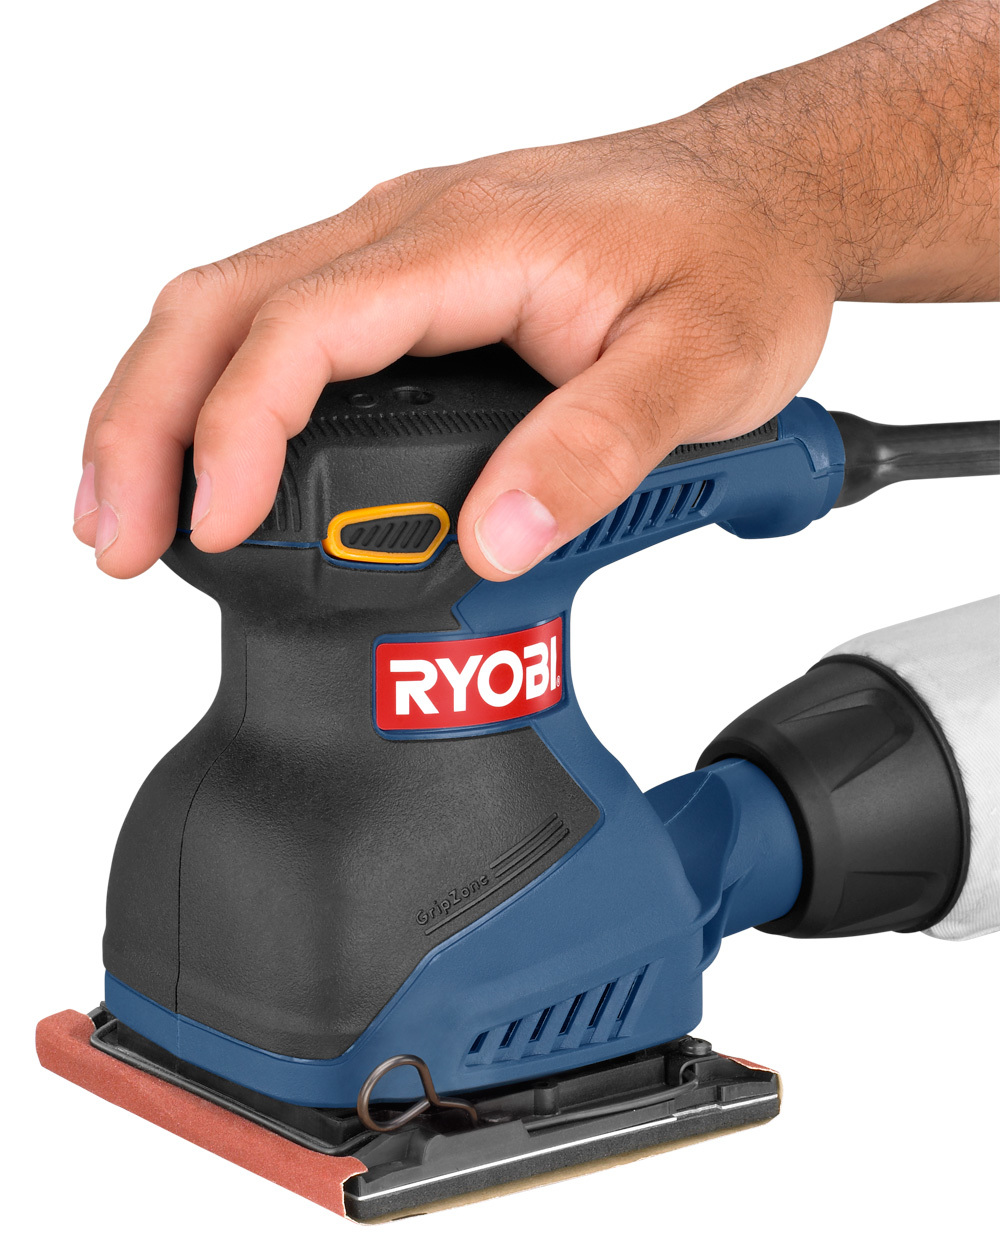 Ryobi Sander Vacuum Adapter Shopvac/ridgid/festool/craftsman Dust